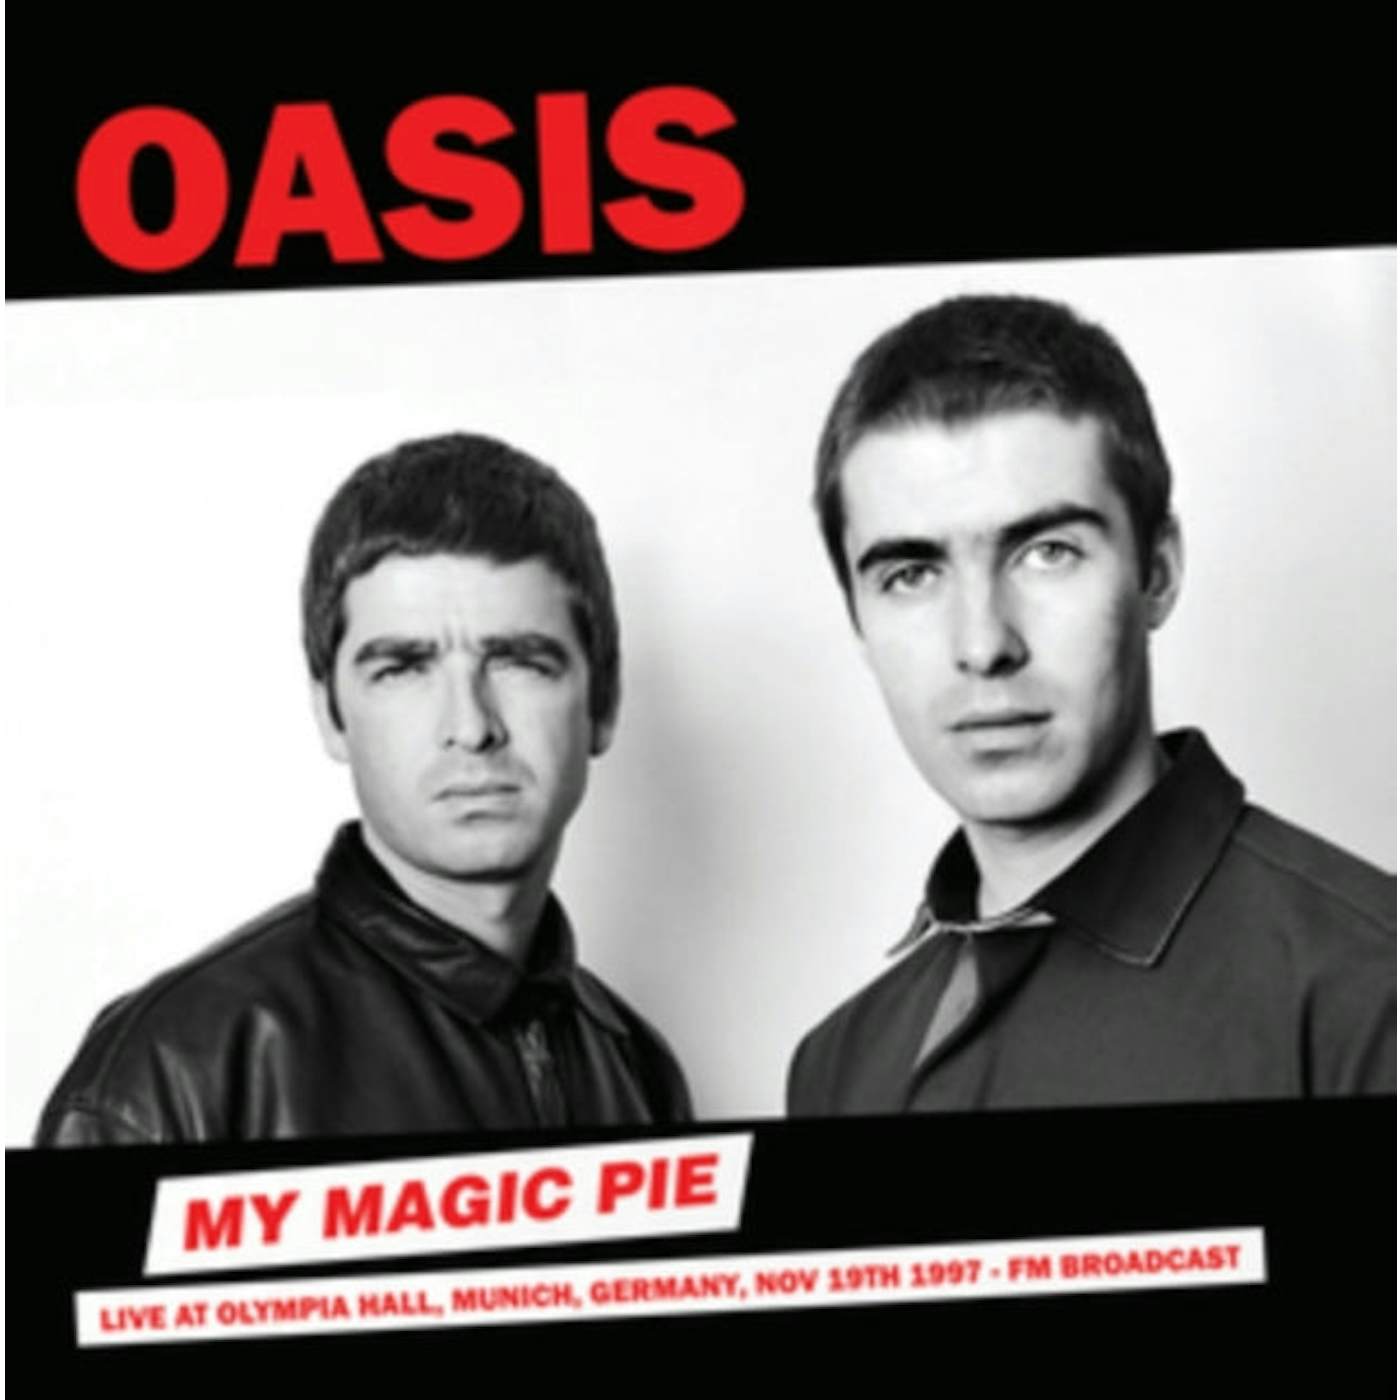 Oasis LP - My Magic Pie: Live At Olympia Hall. Munich. Germany. Nov 19Th 1997 - Fm Broadcast (Vinyl)